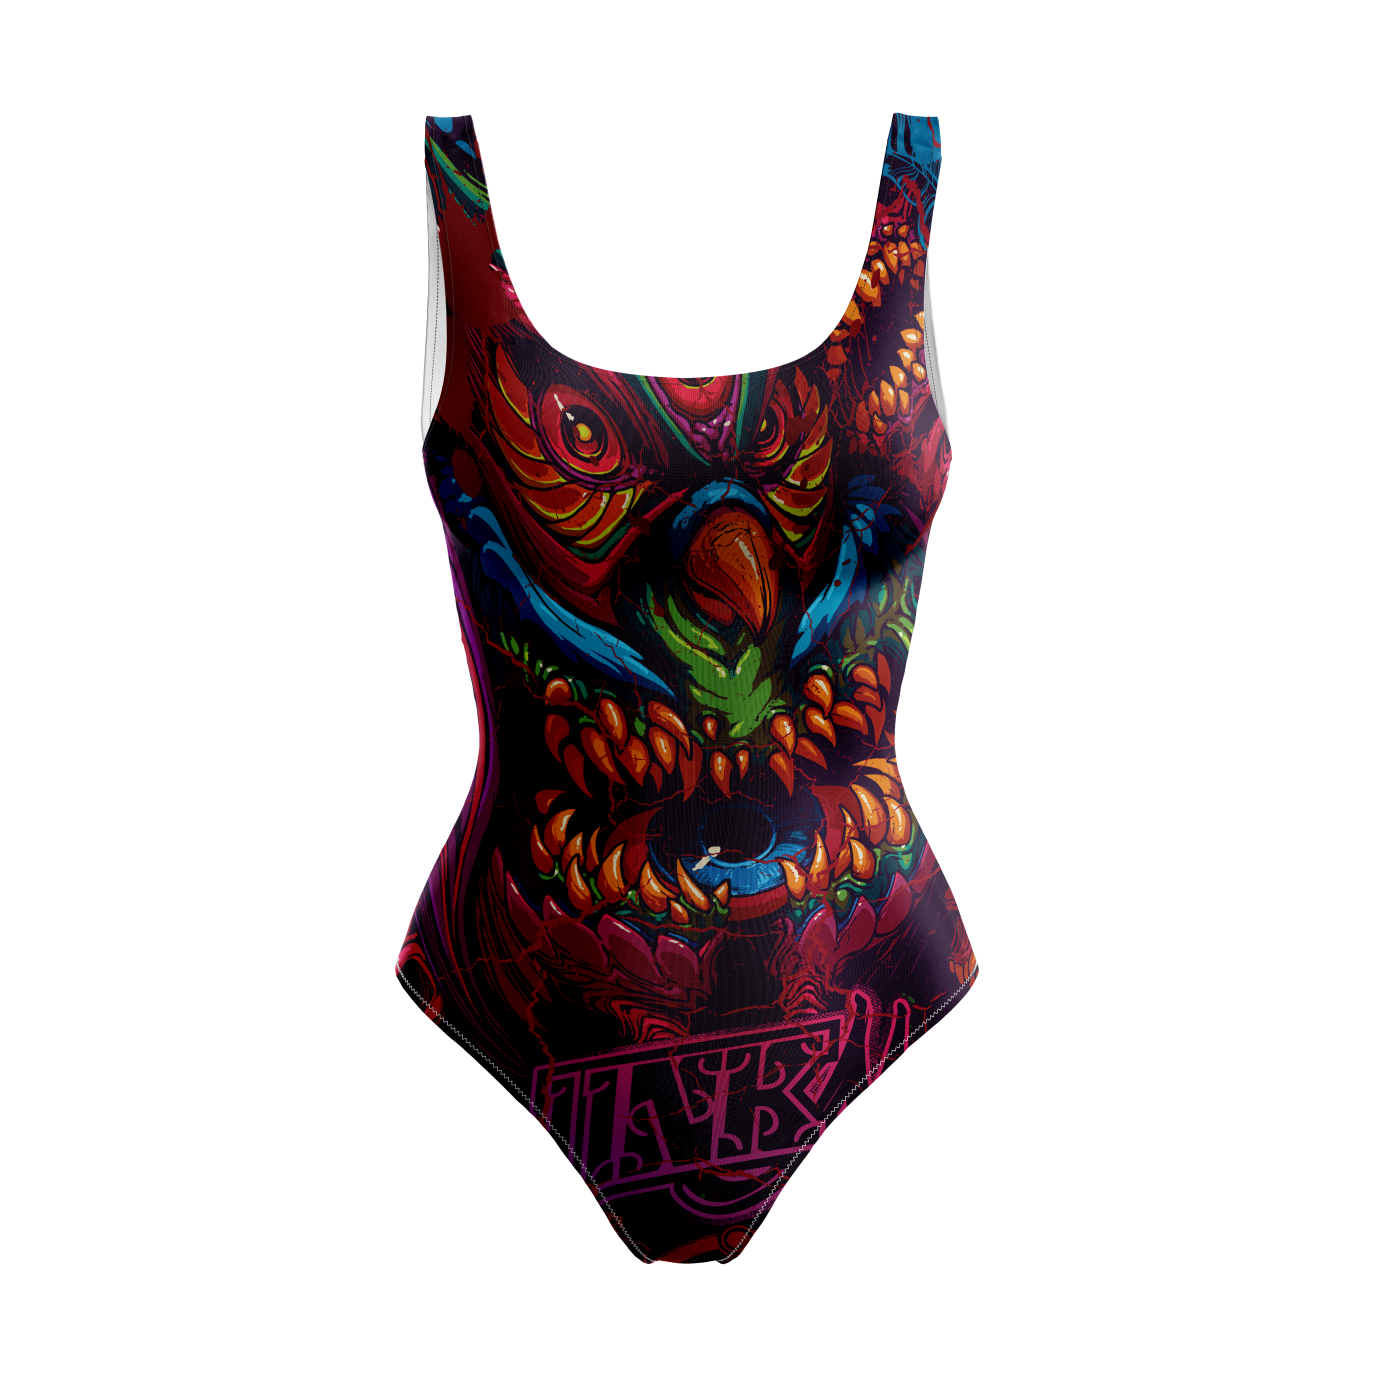 Women's Owl Beast classic standard cut one piece swim suit